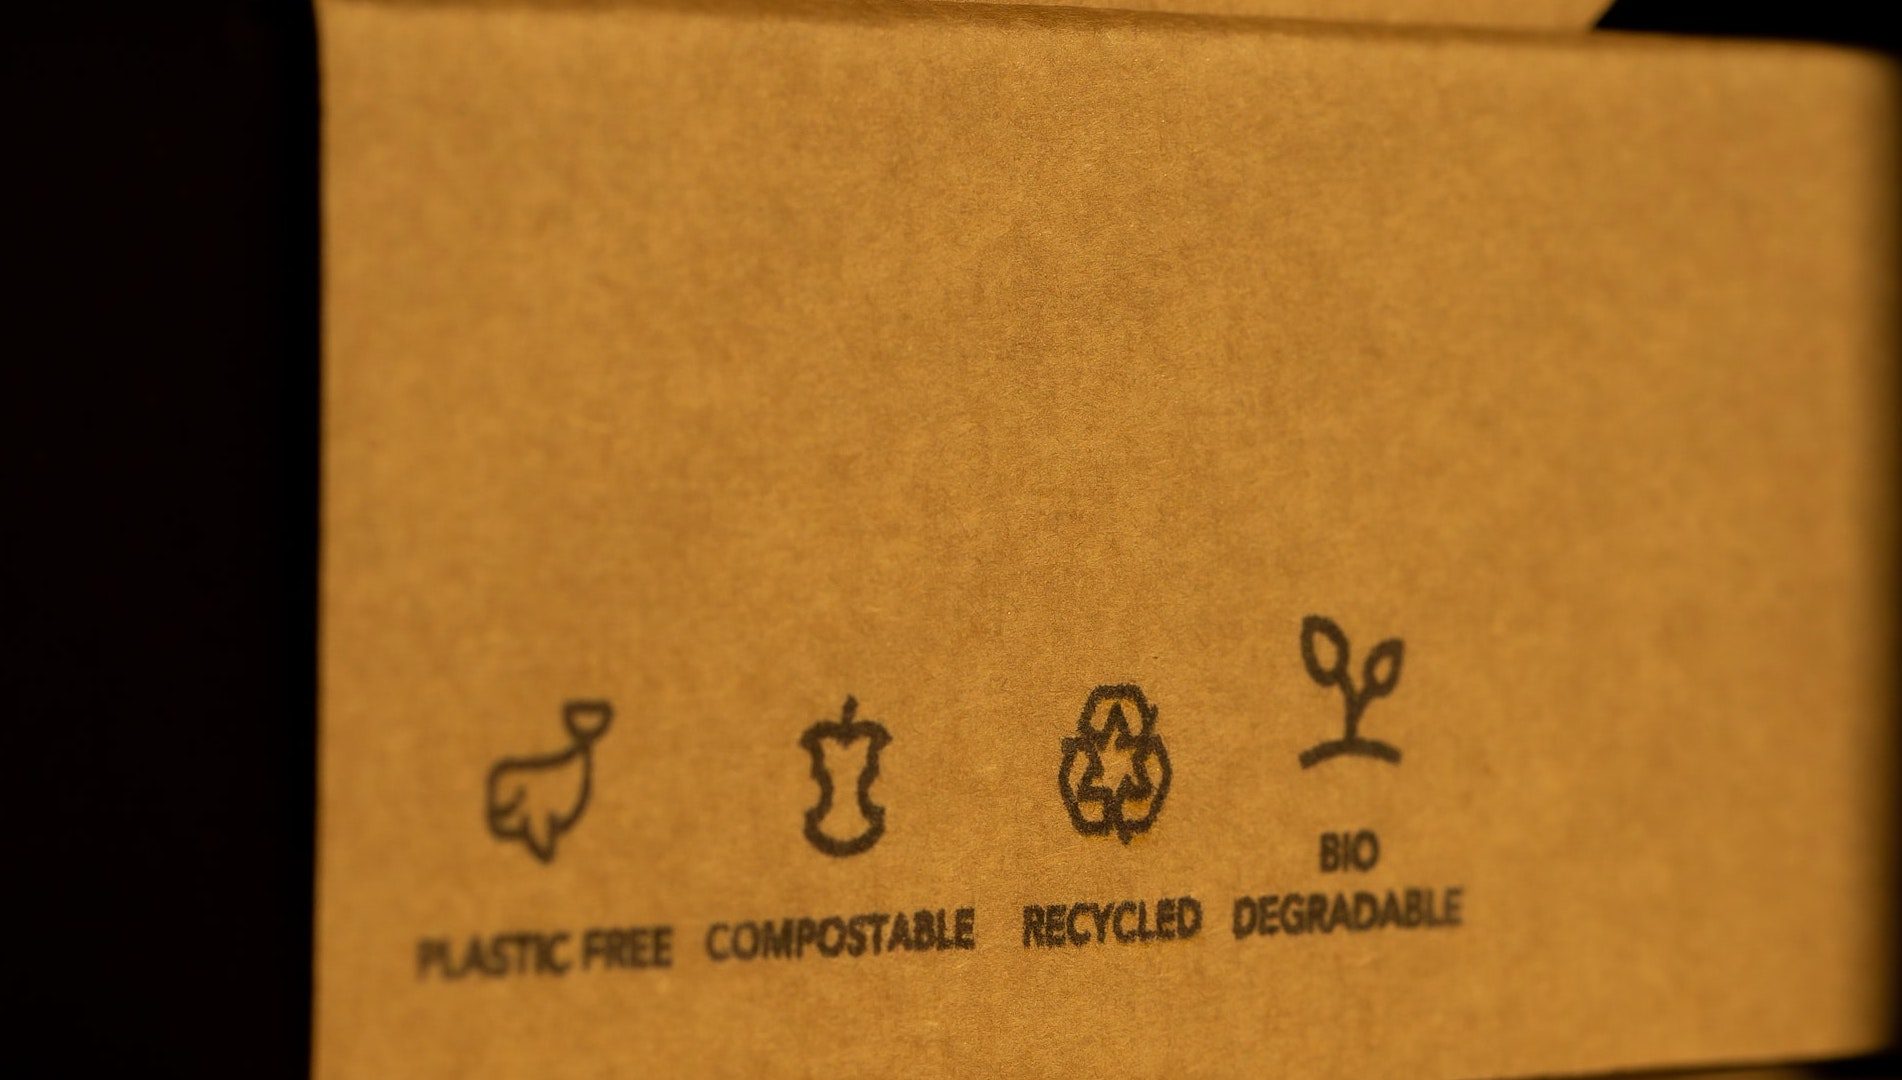 Rinnovabili • packaging sostenibile